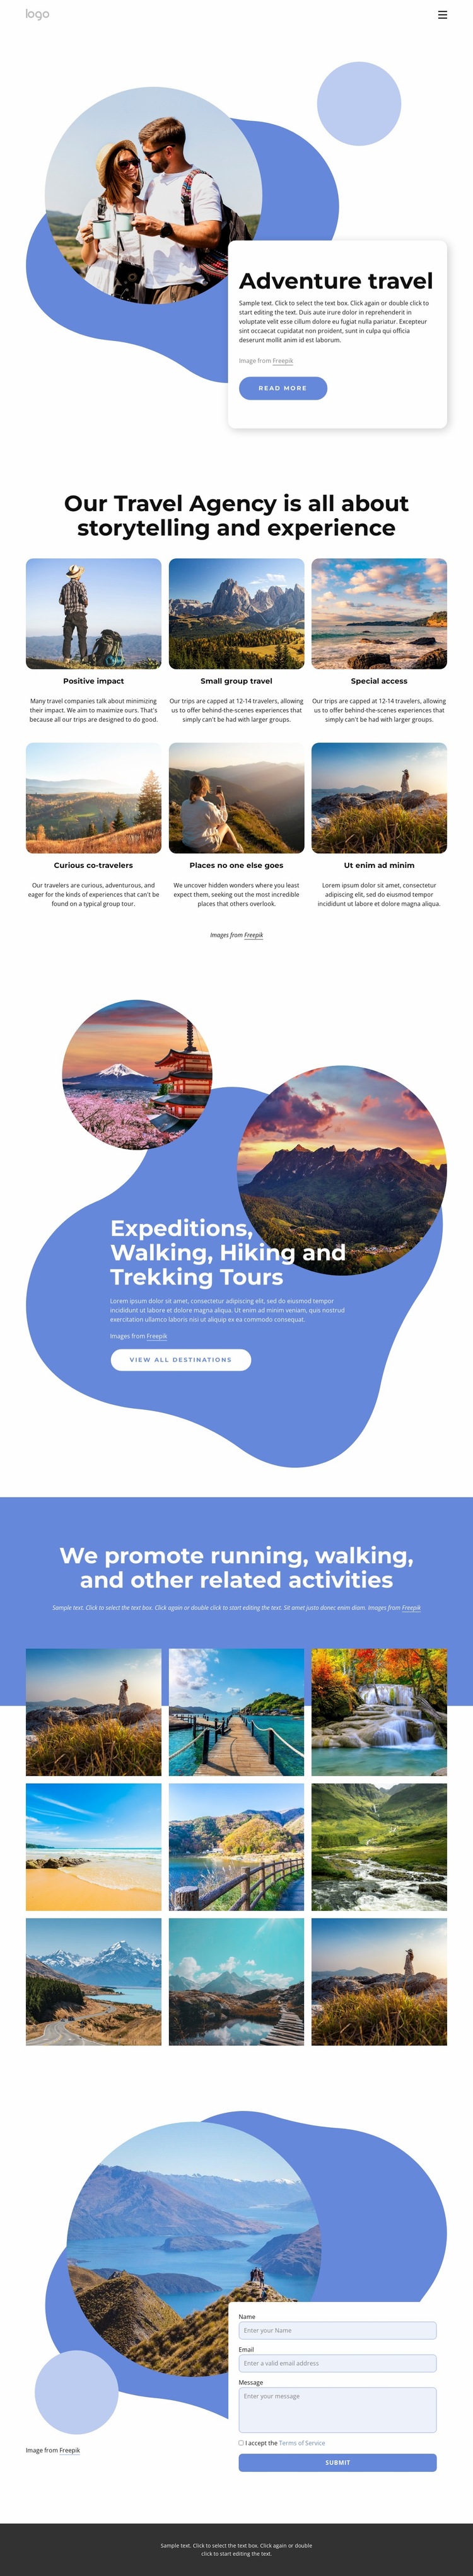 Agency specializing in luxury adventure travel Website Builder Templates